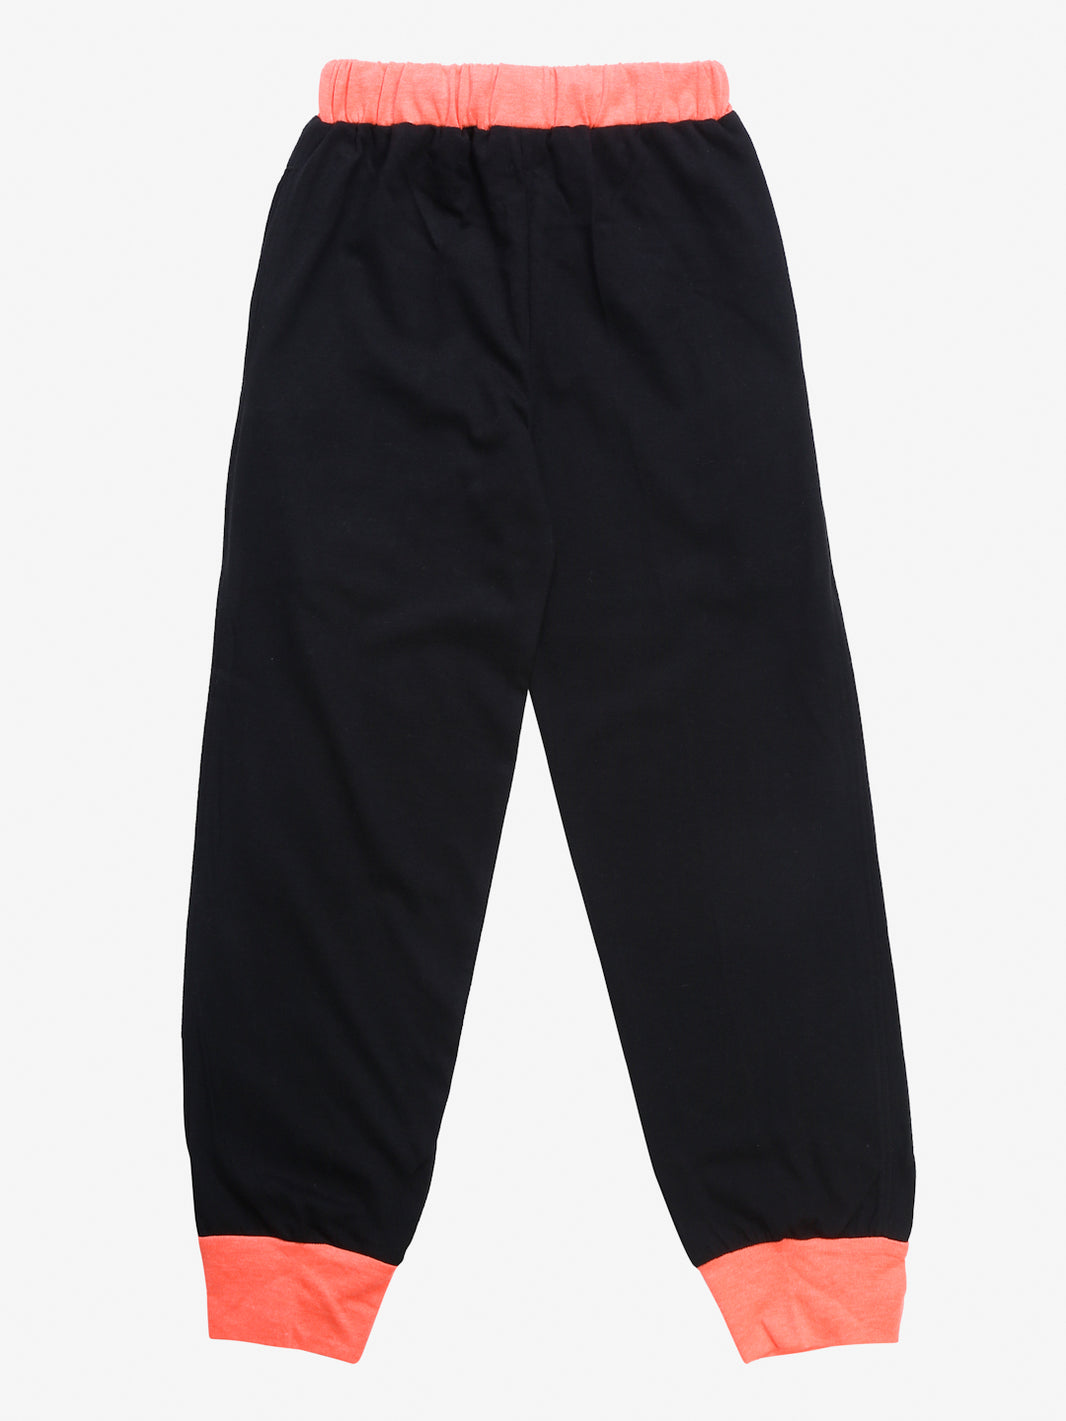 Vimal Jonney Kid's Black Trackpants - Vimal Clothing store